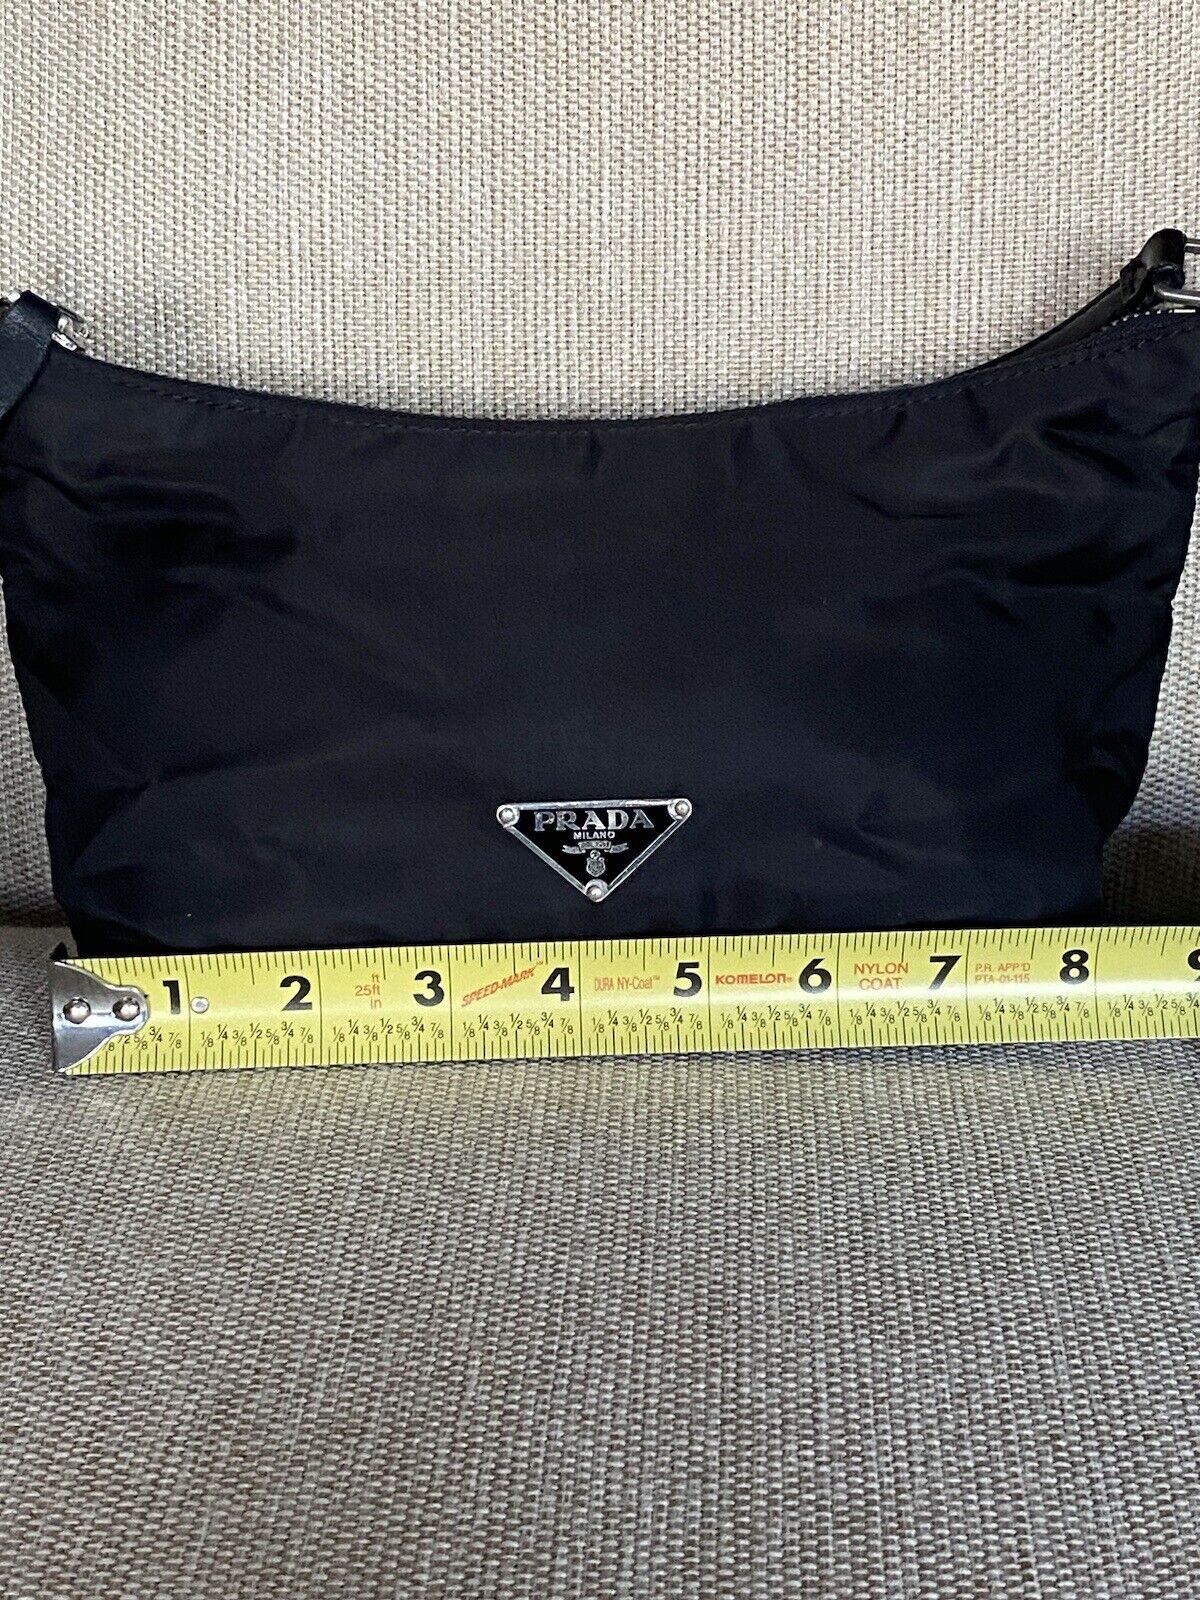 Prada Semitracolla Nylon Shoulder Bag - image 11